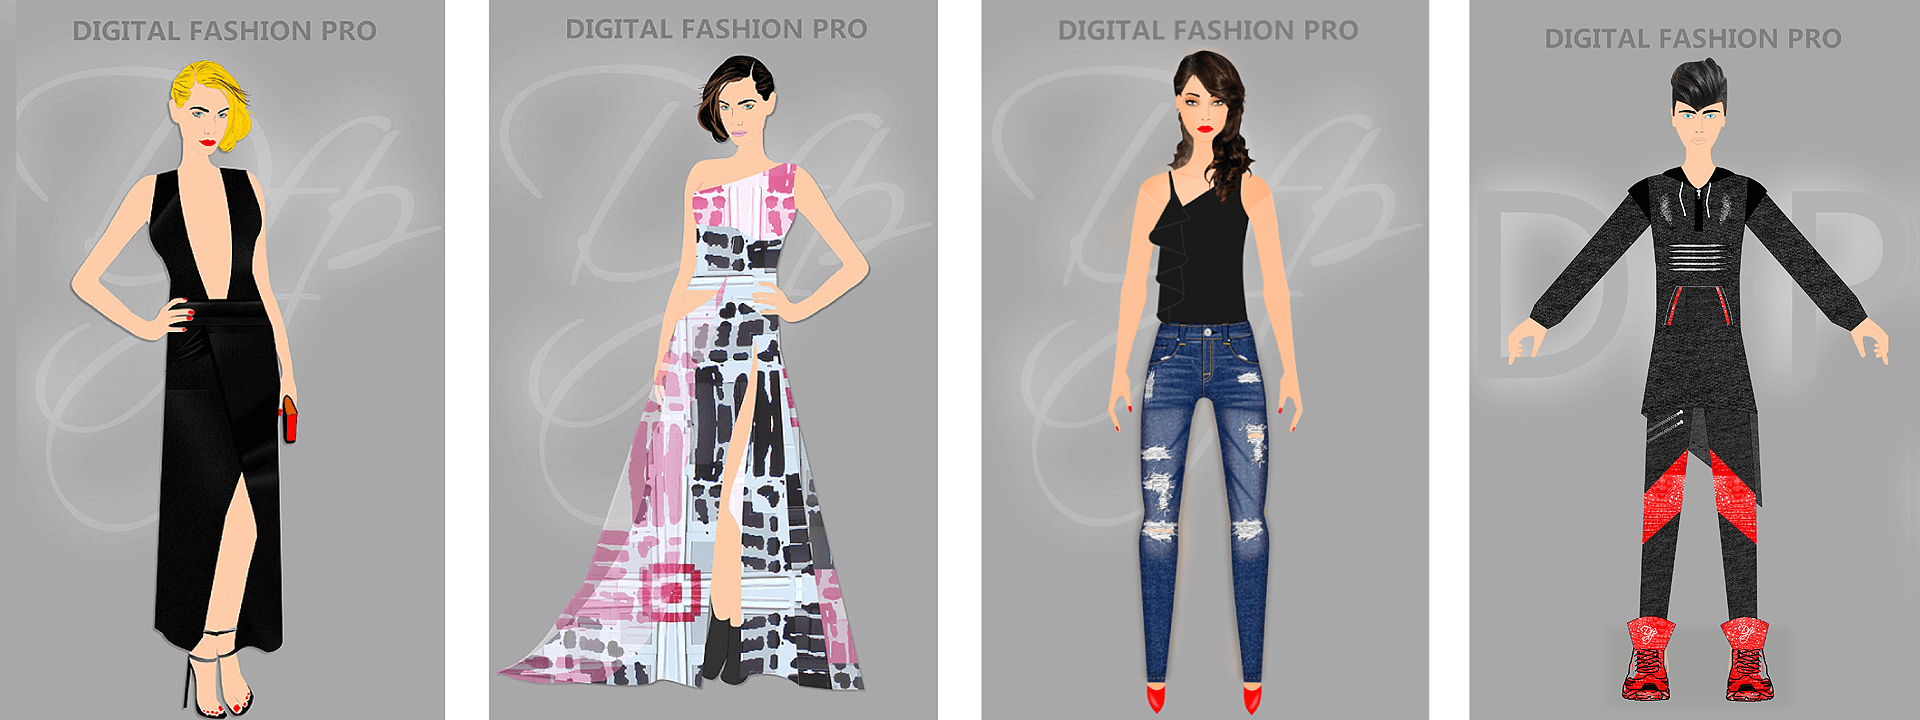 digital fashion pro 9 free download